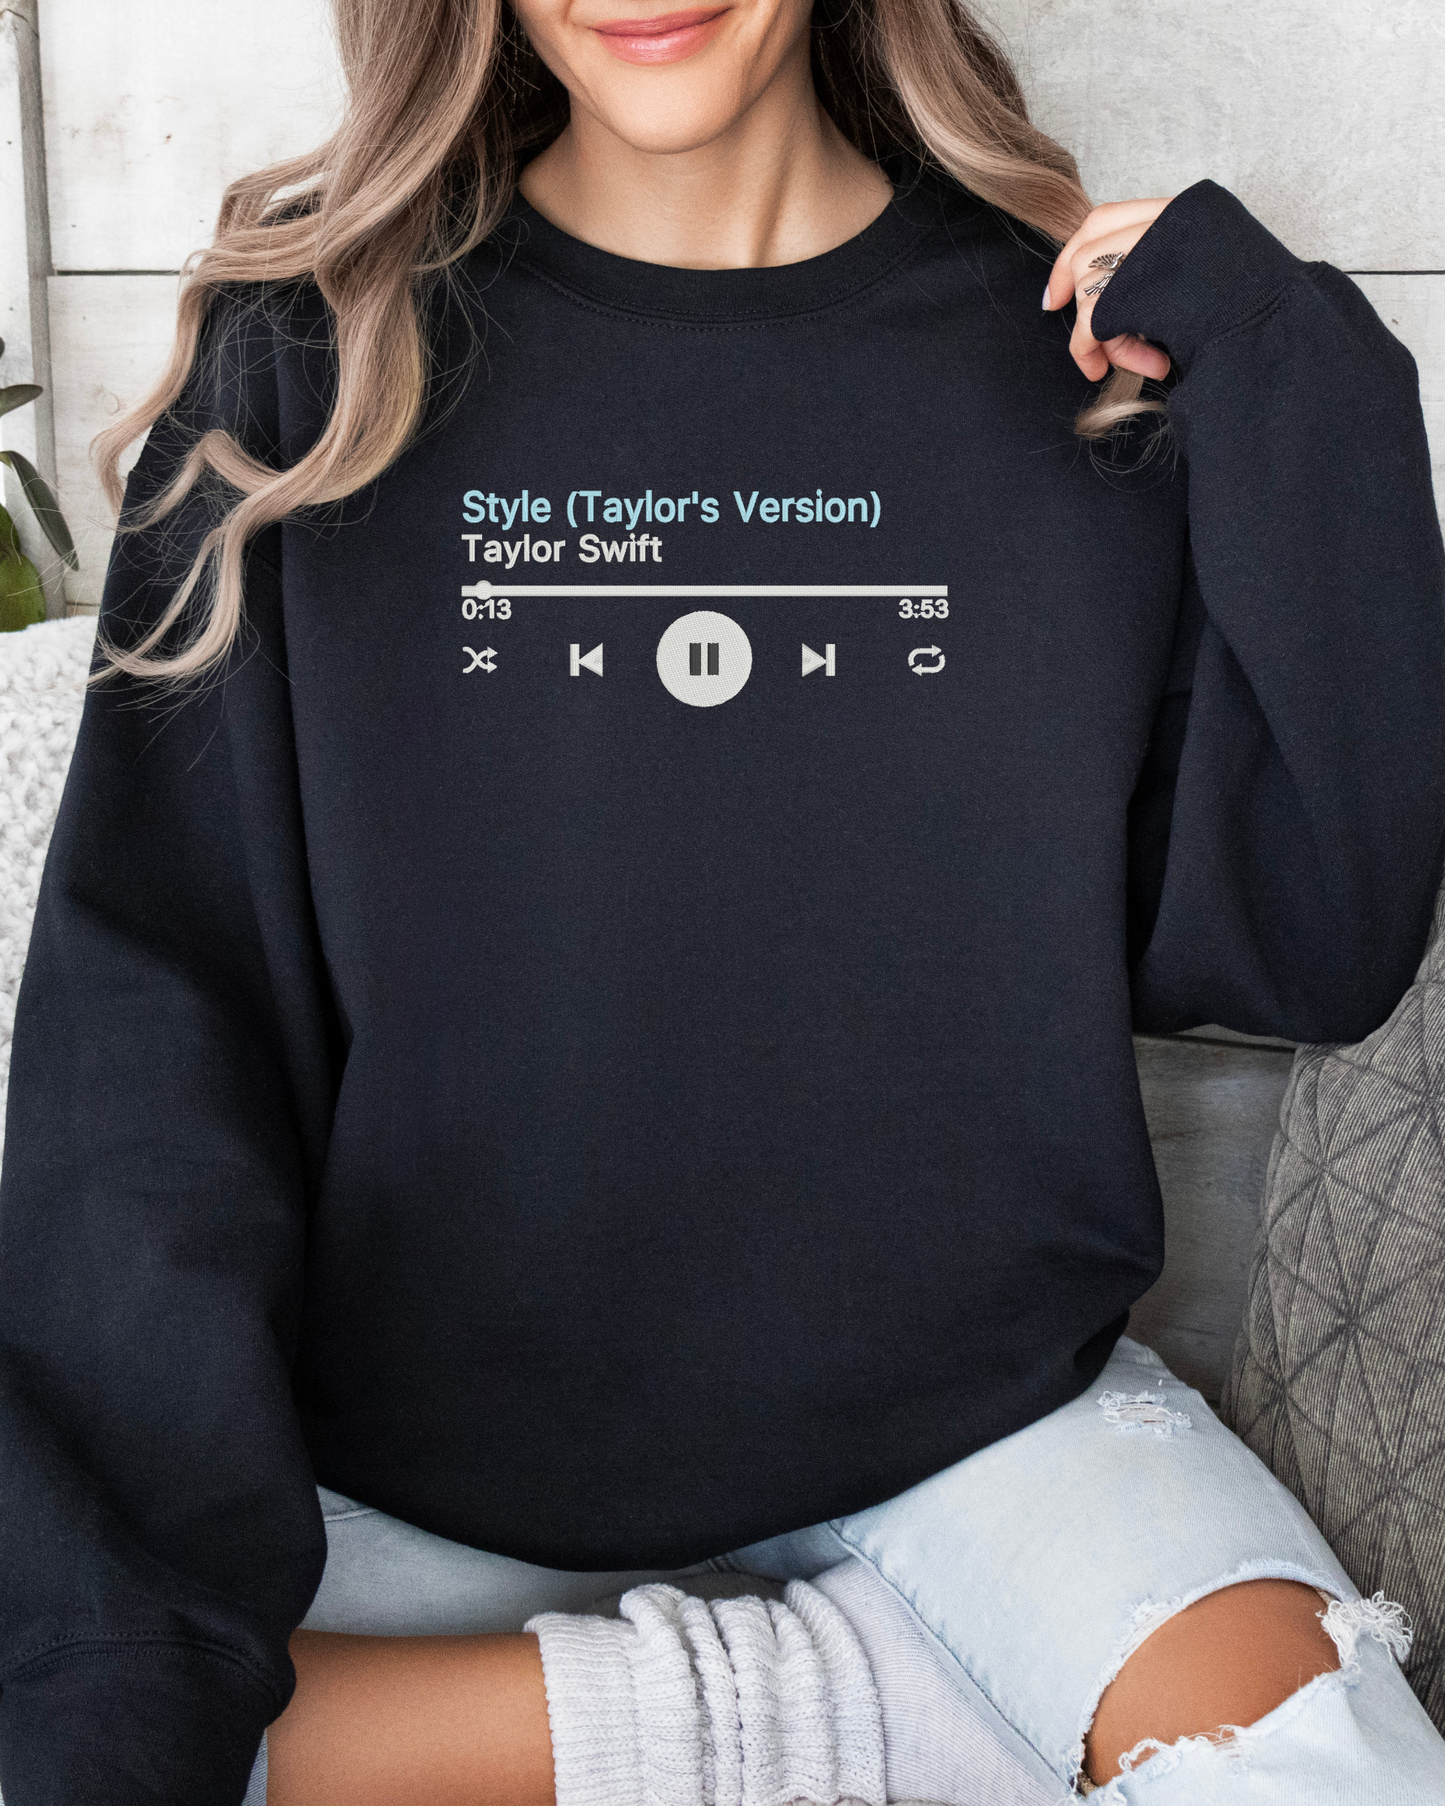 Style Spotify Sweatshirt